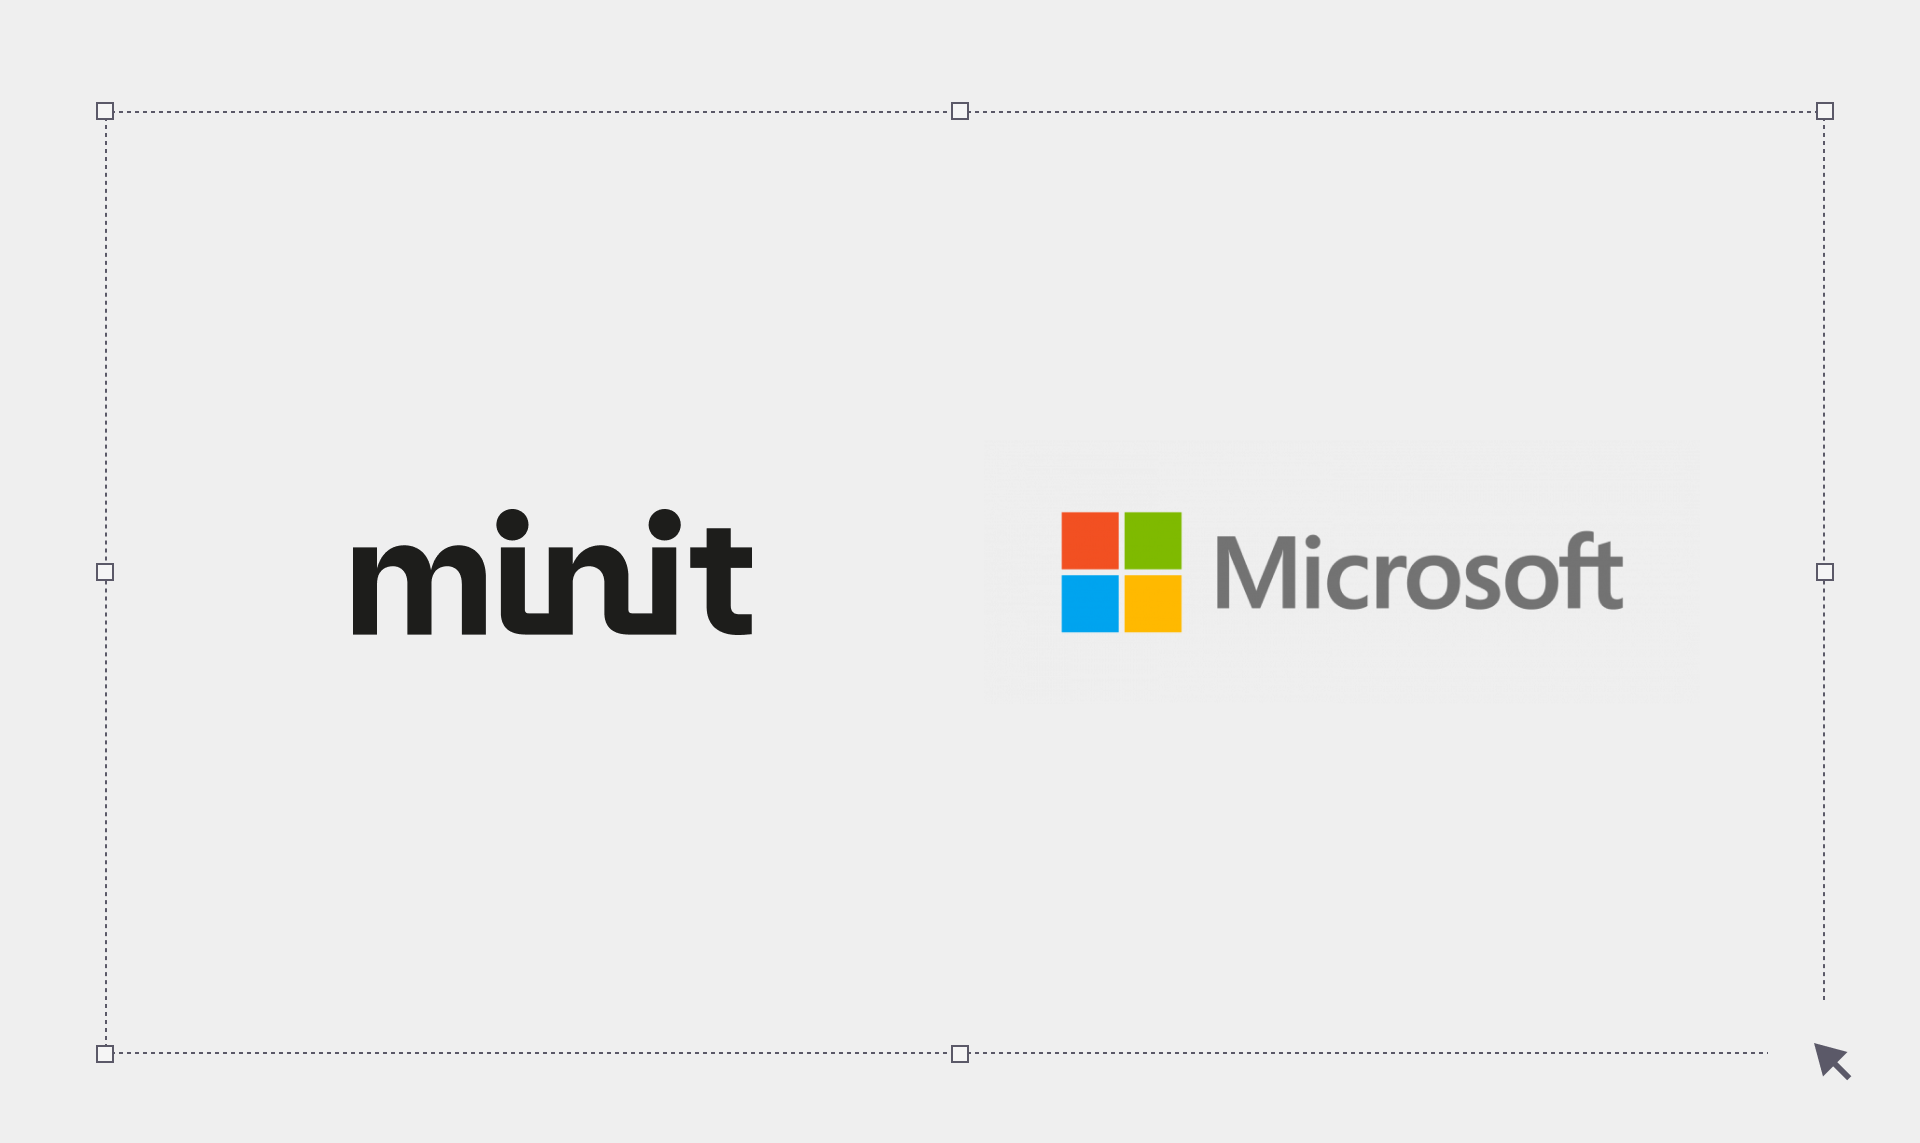 Minit and Microsoft logos